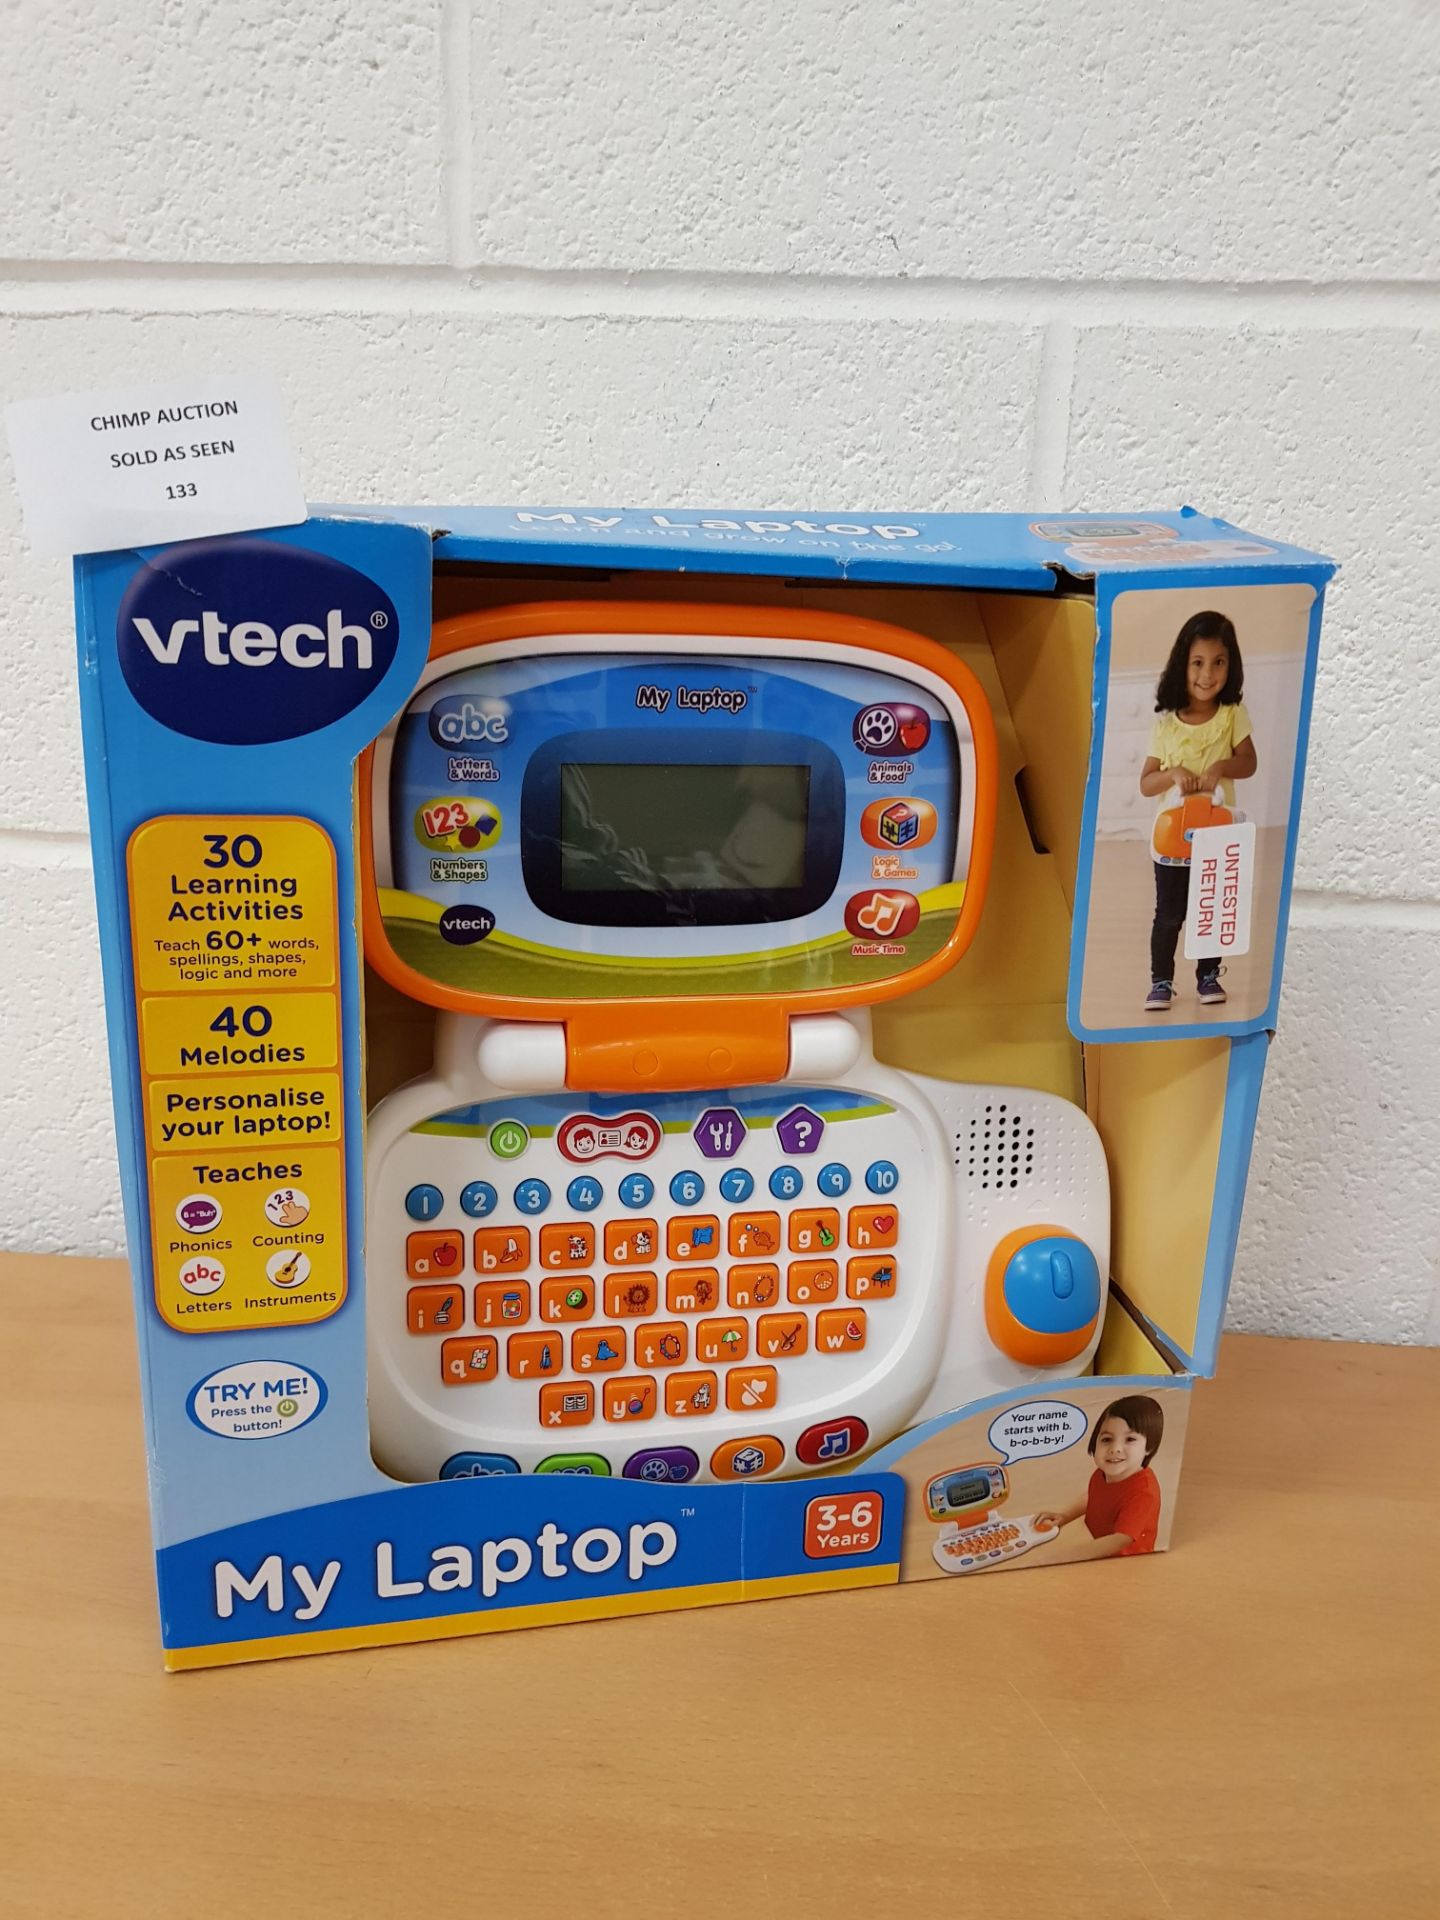 Vtech My laptop playset